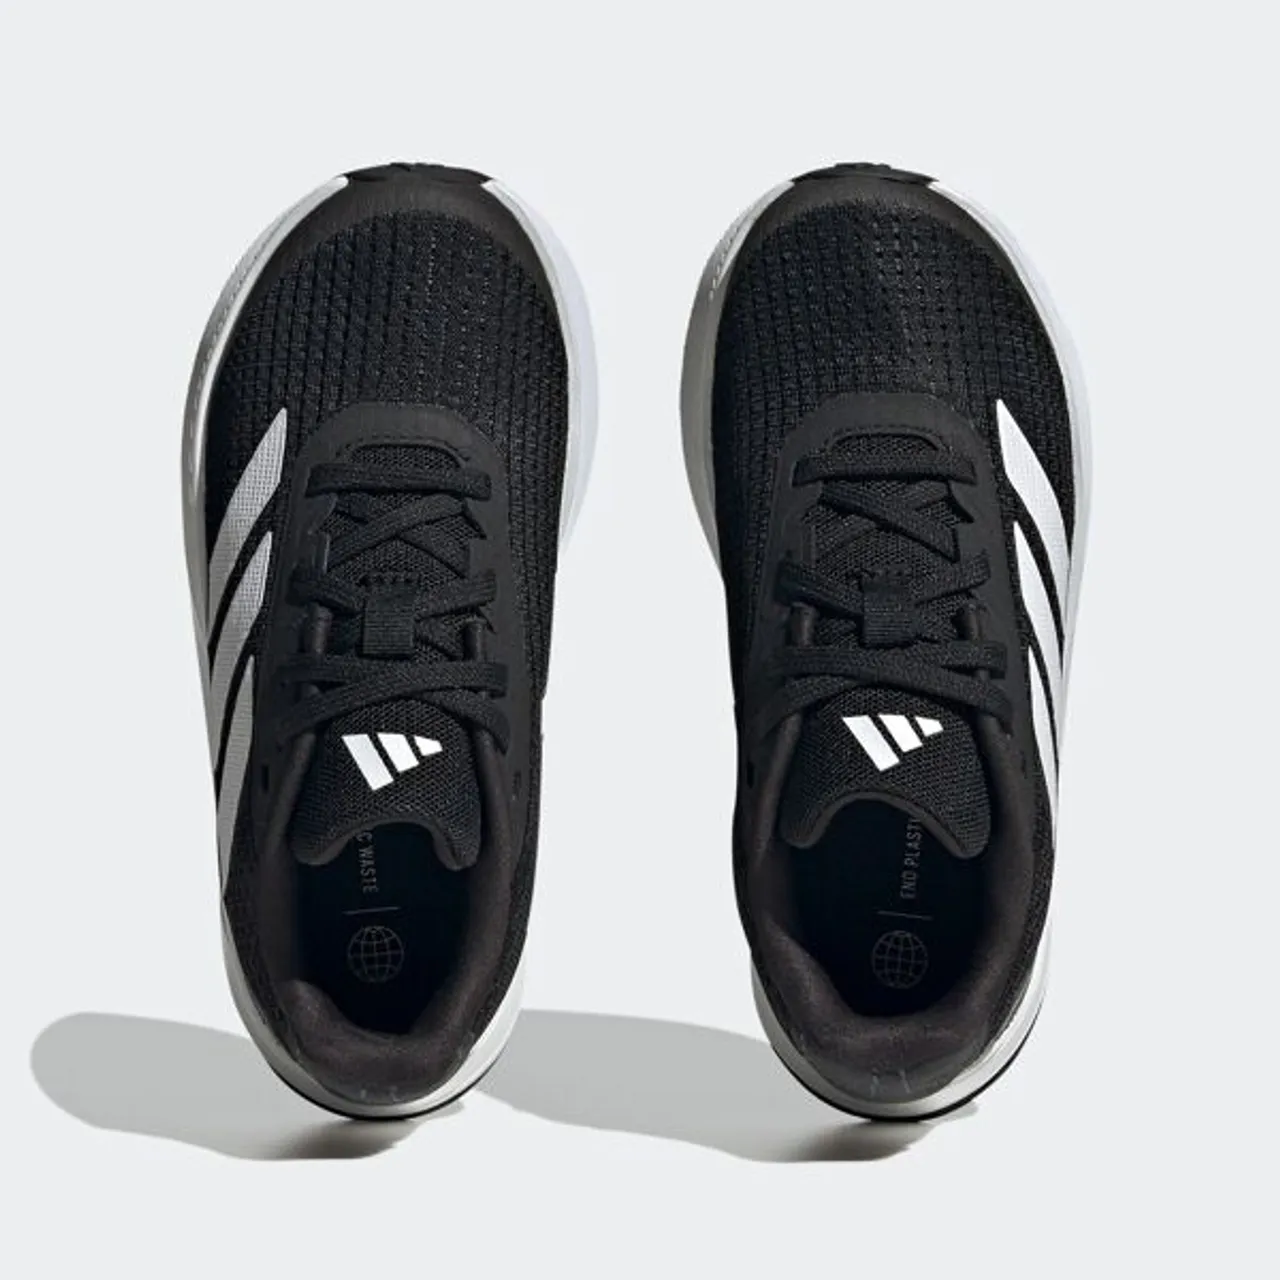 Sneaker ADIDAS SPORTSWEAR "DURAMO SL KIDS" Gr. 39, schwarz-weiß (core black, cloud white, carbon) Schuhe Laufschuhe